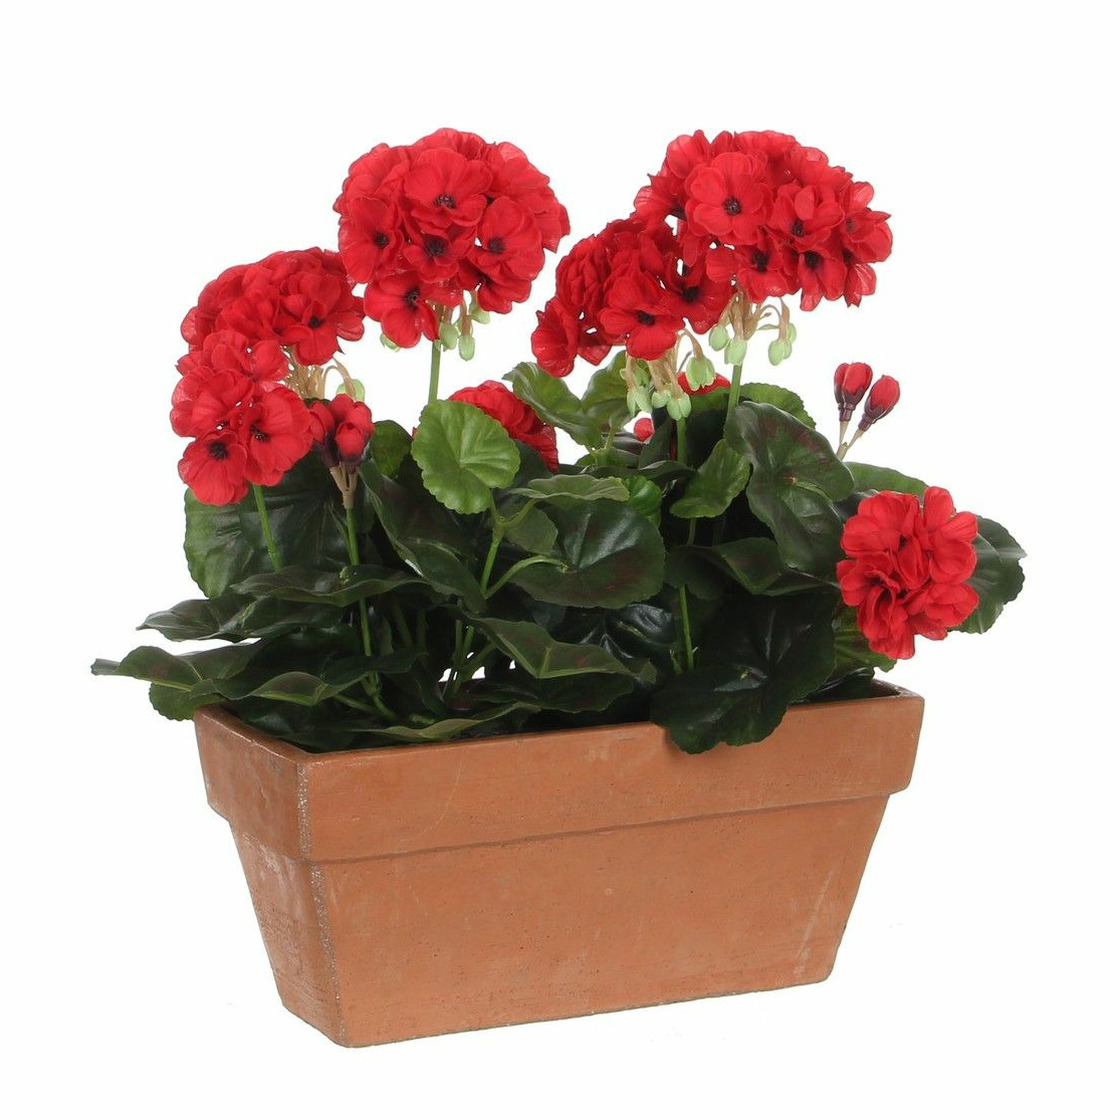 Geranium balkon kunstplant rood in keramieken pot L29 x B13 x H40 cm